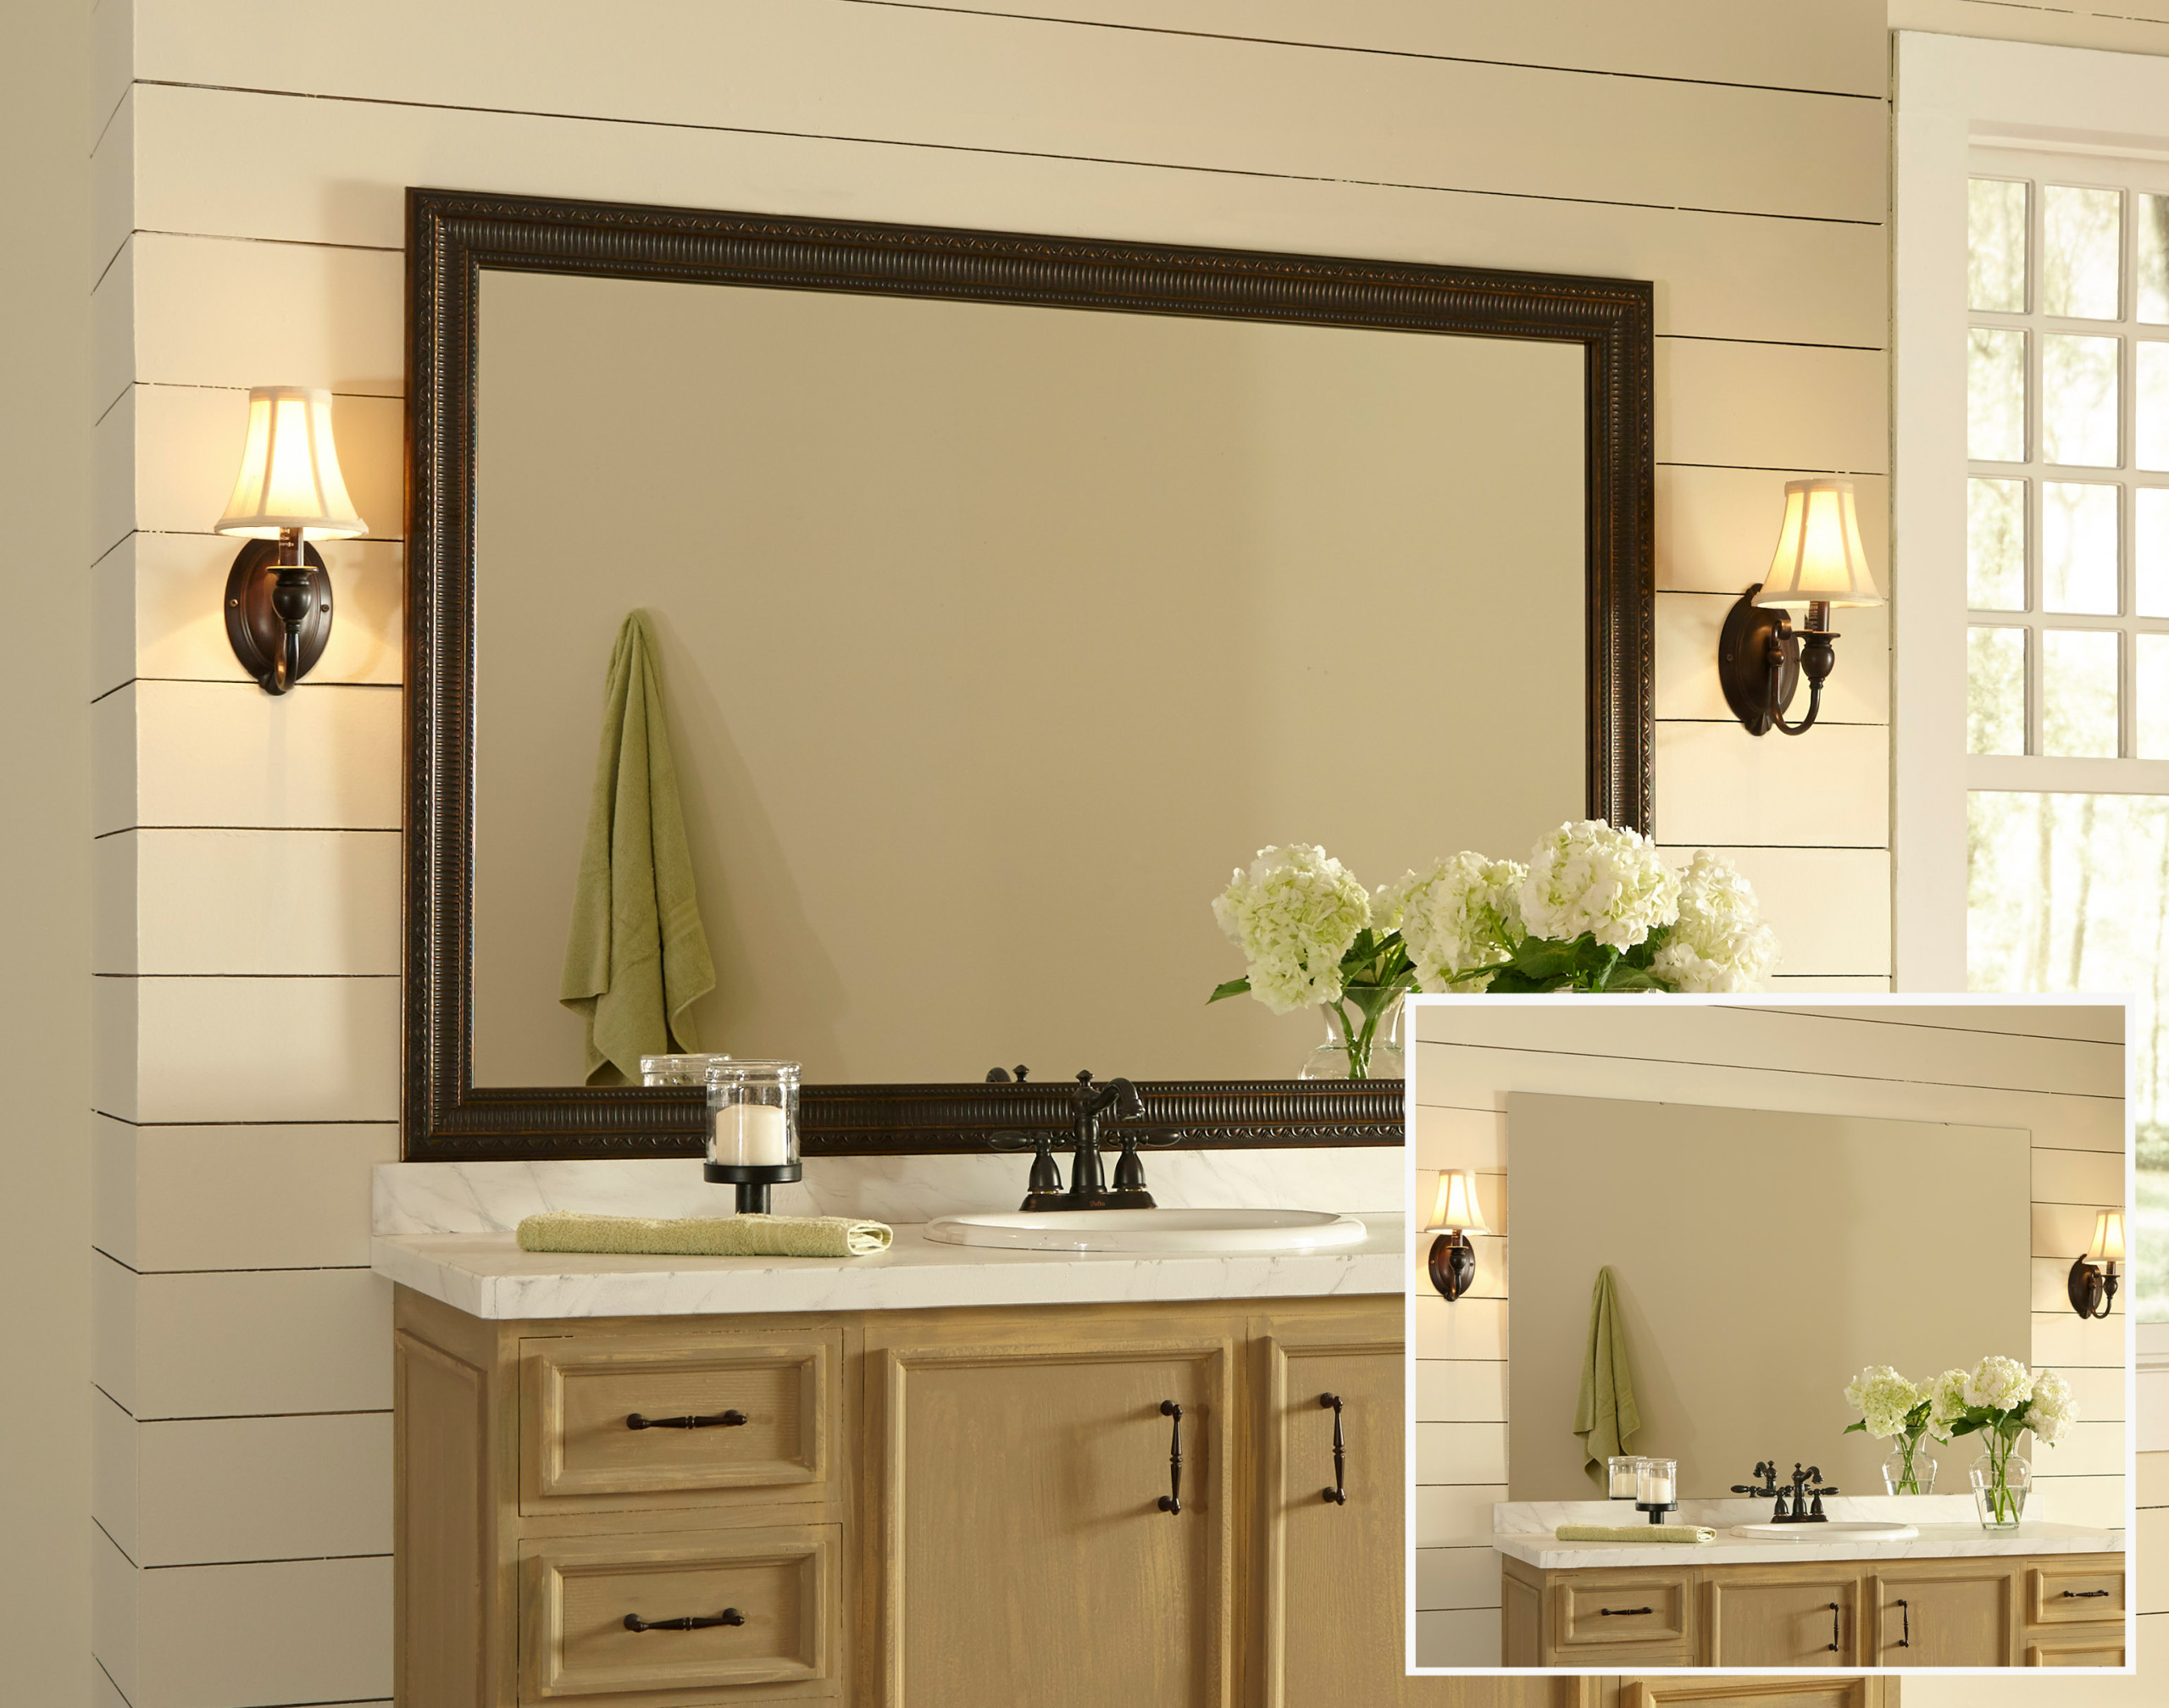 Framed Bathroom Mirror Ideas Houzz, Large Framed Mirrors For Bathrooms